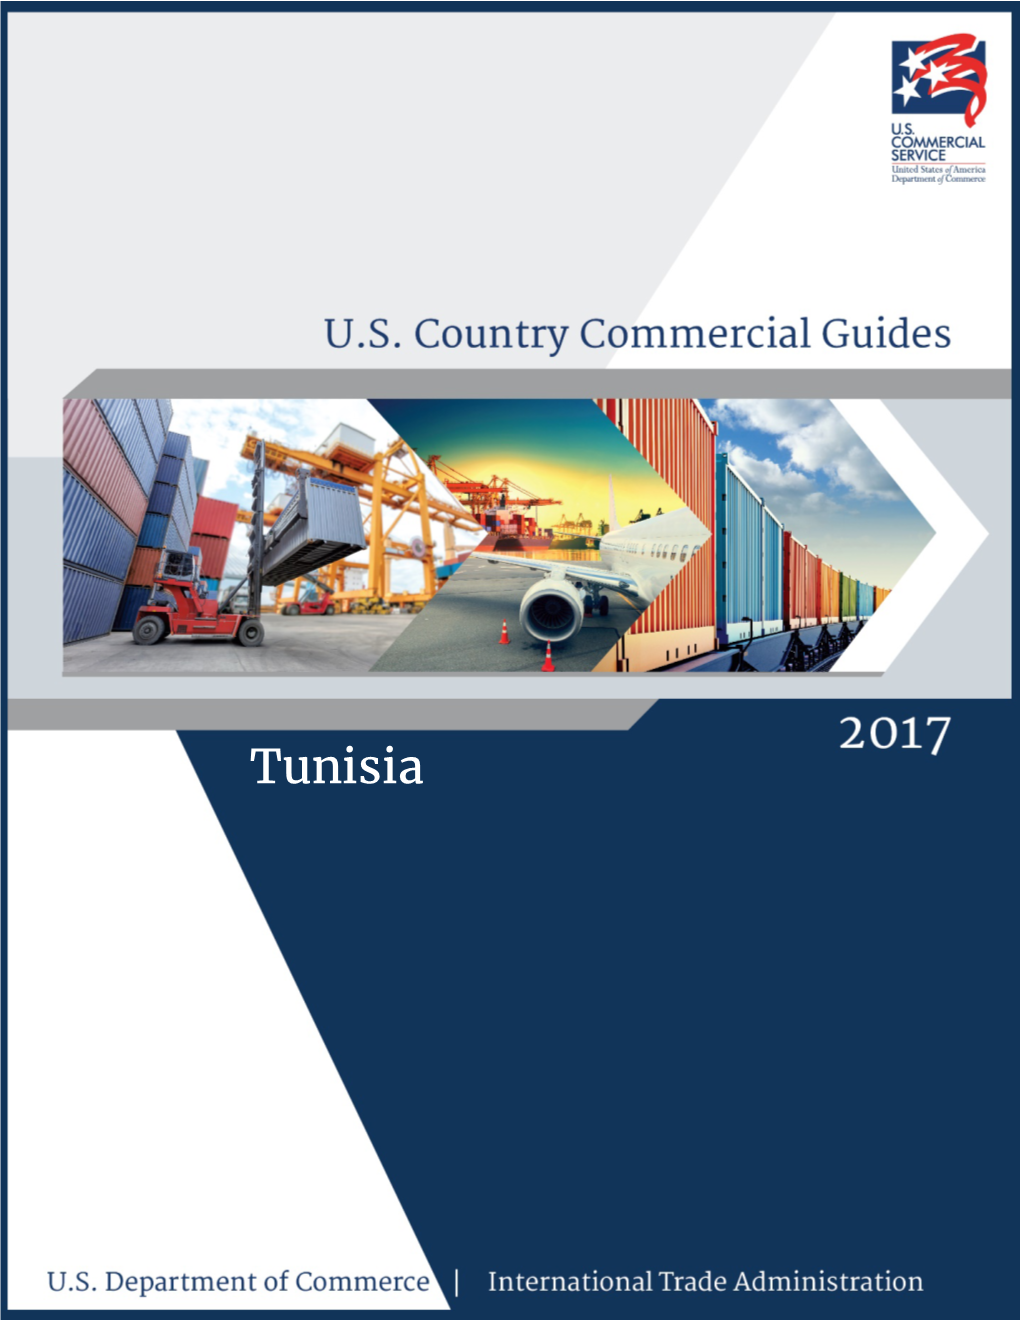 Tunisia Commercial Guide